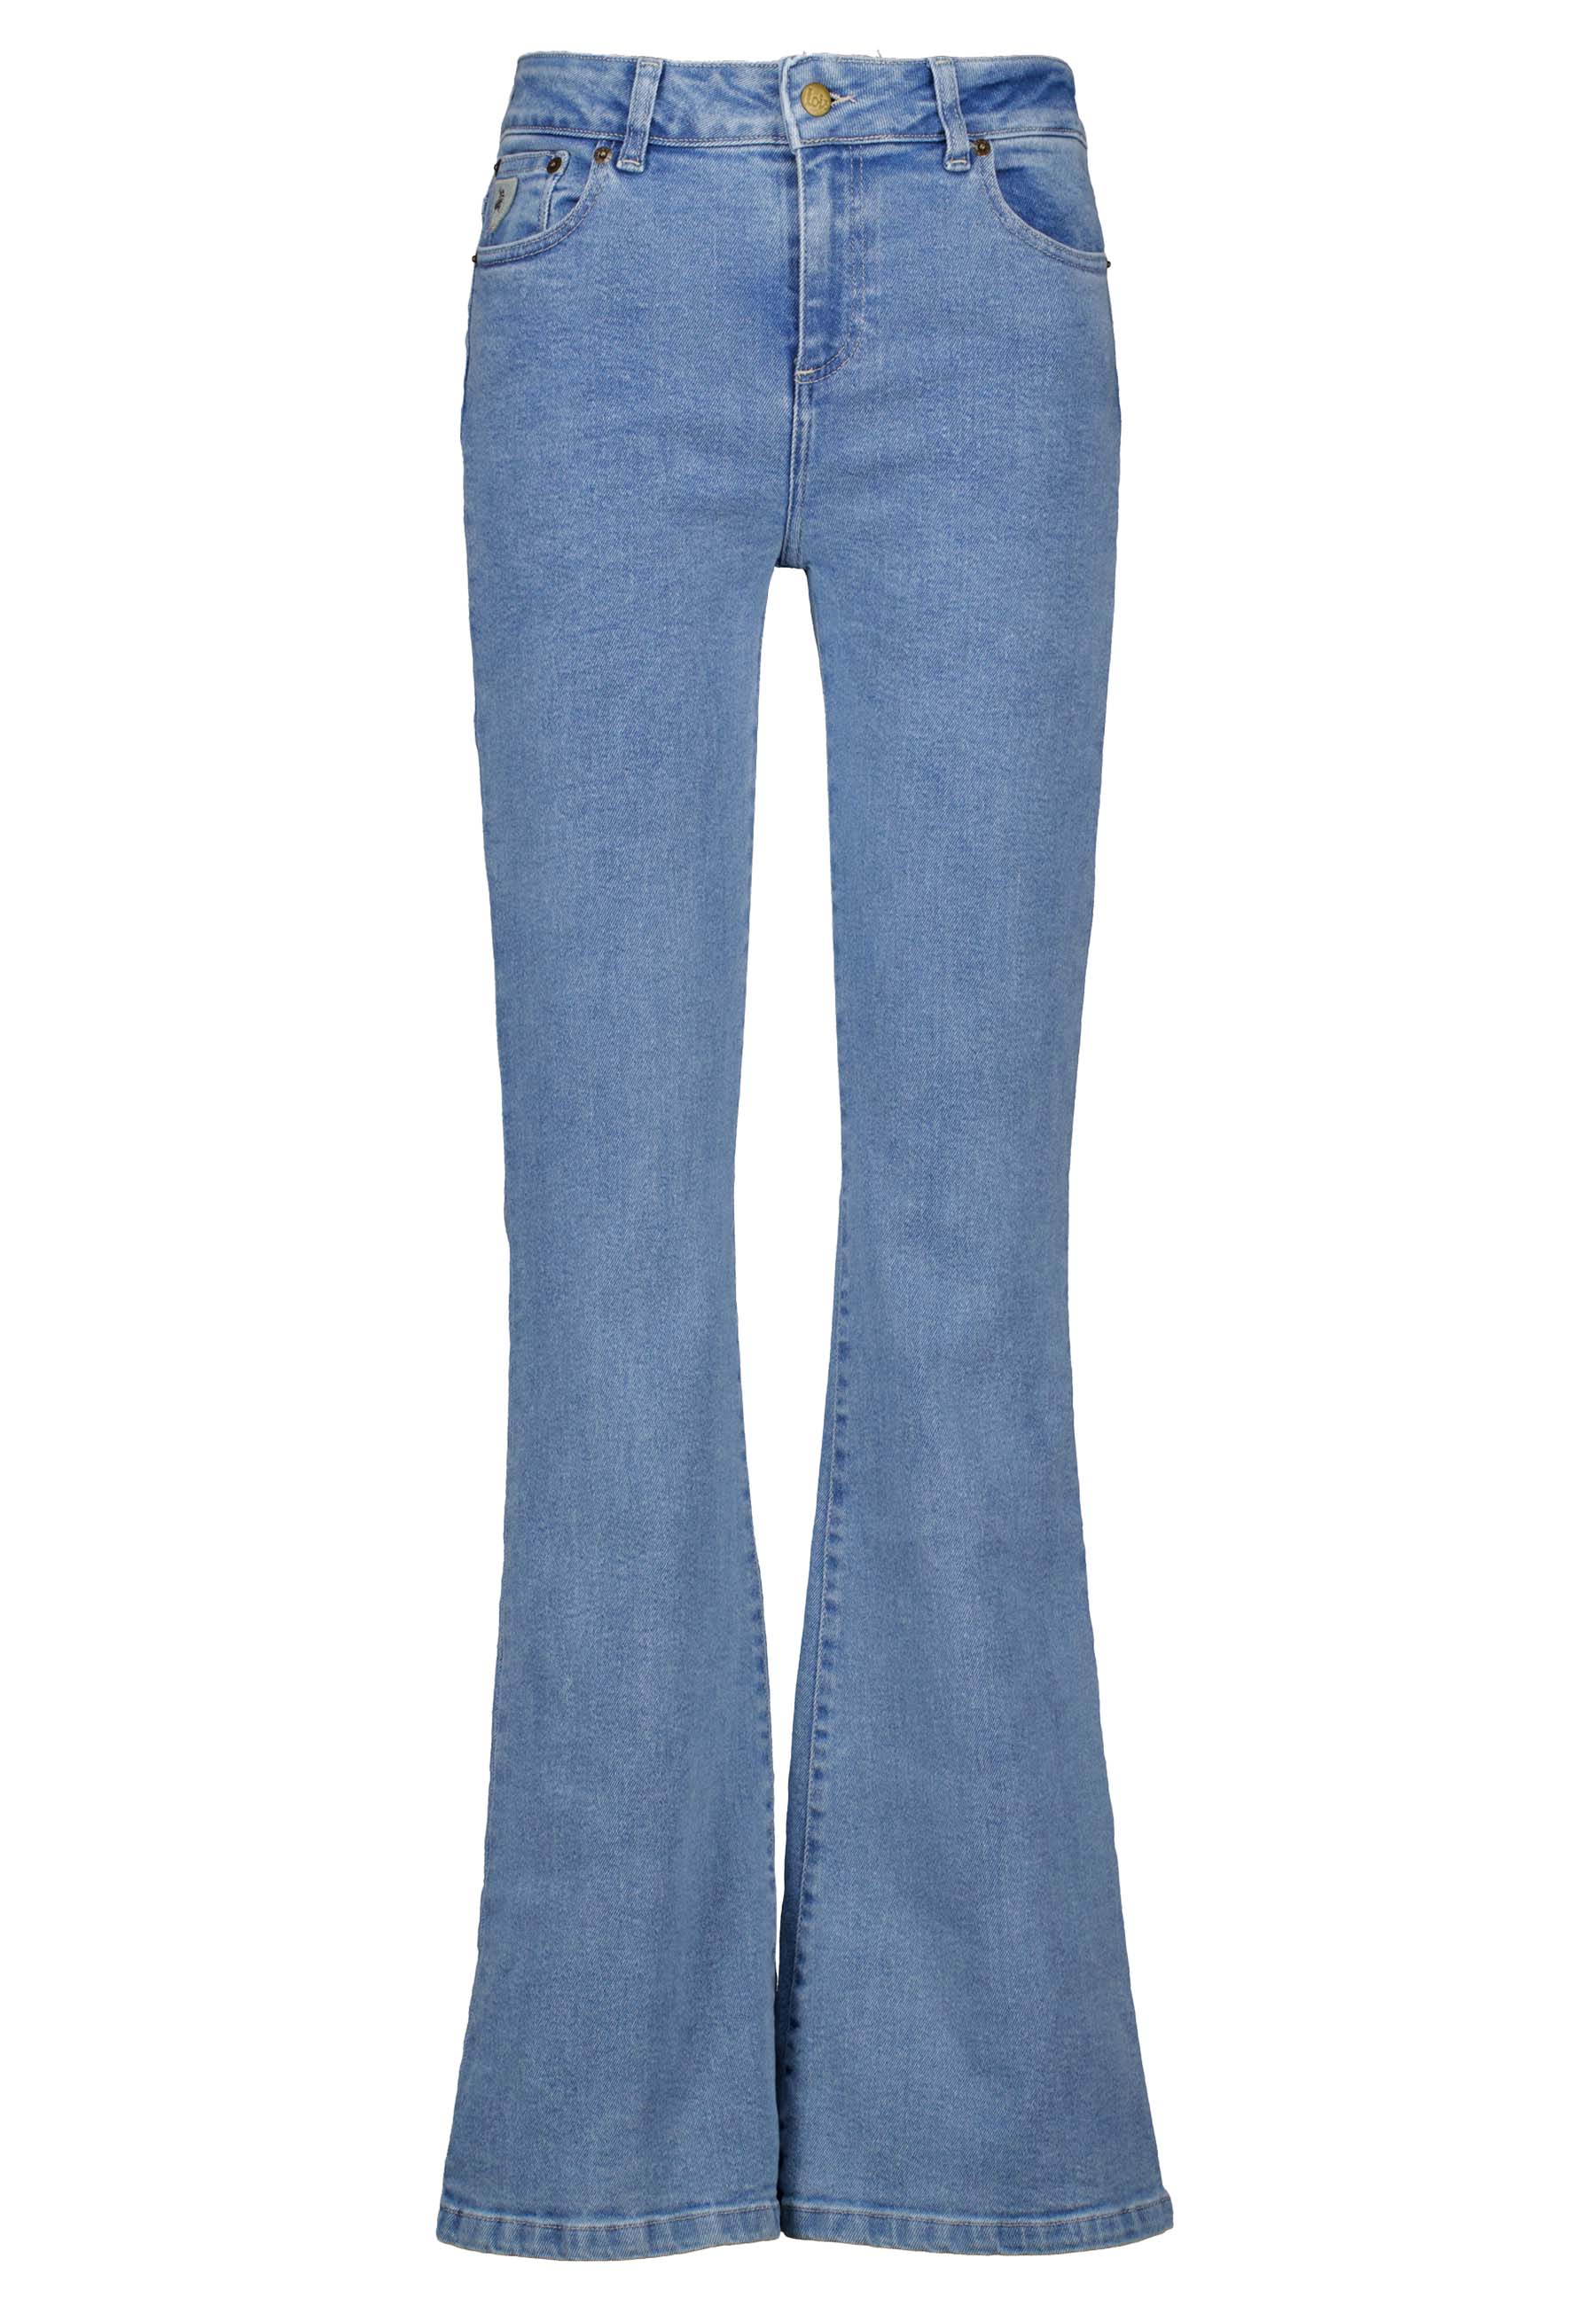 Lois jeans blauw Dames maat 29/34